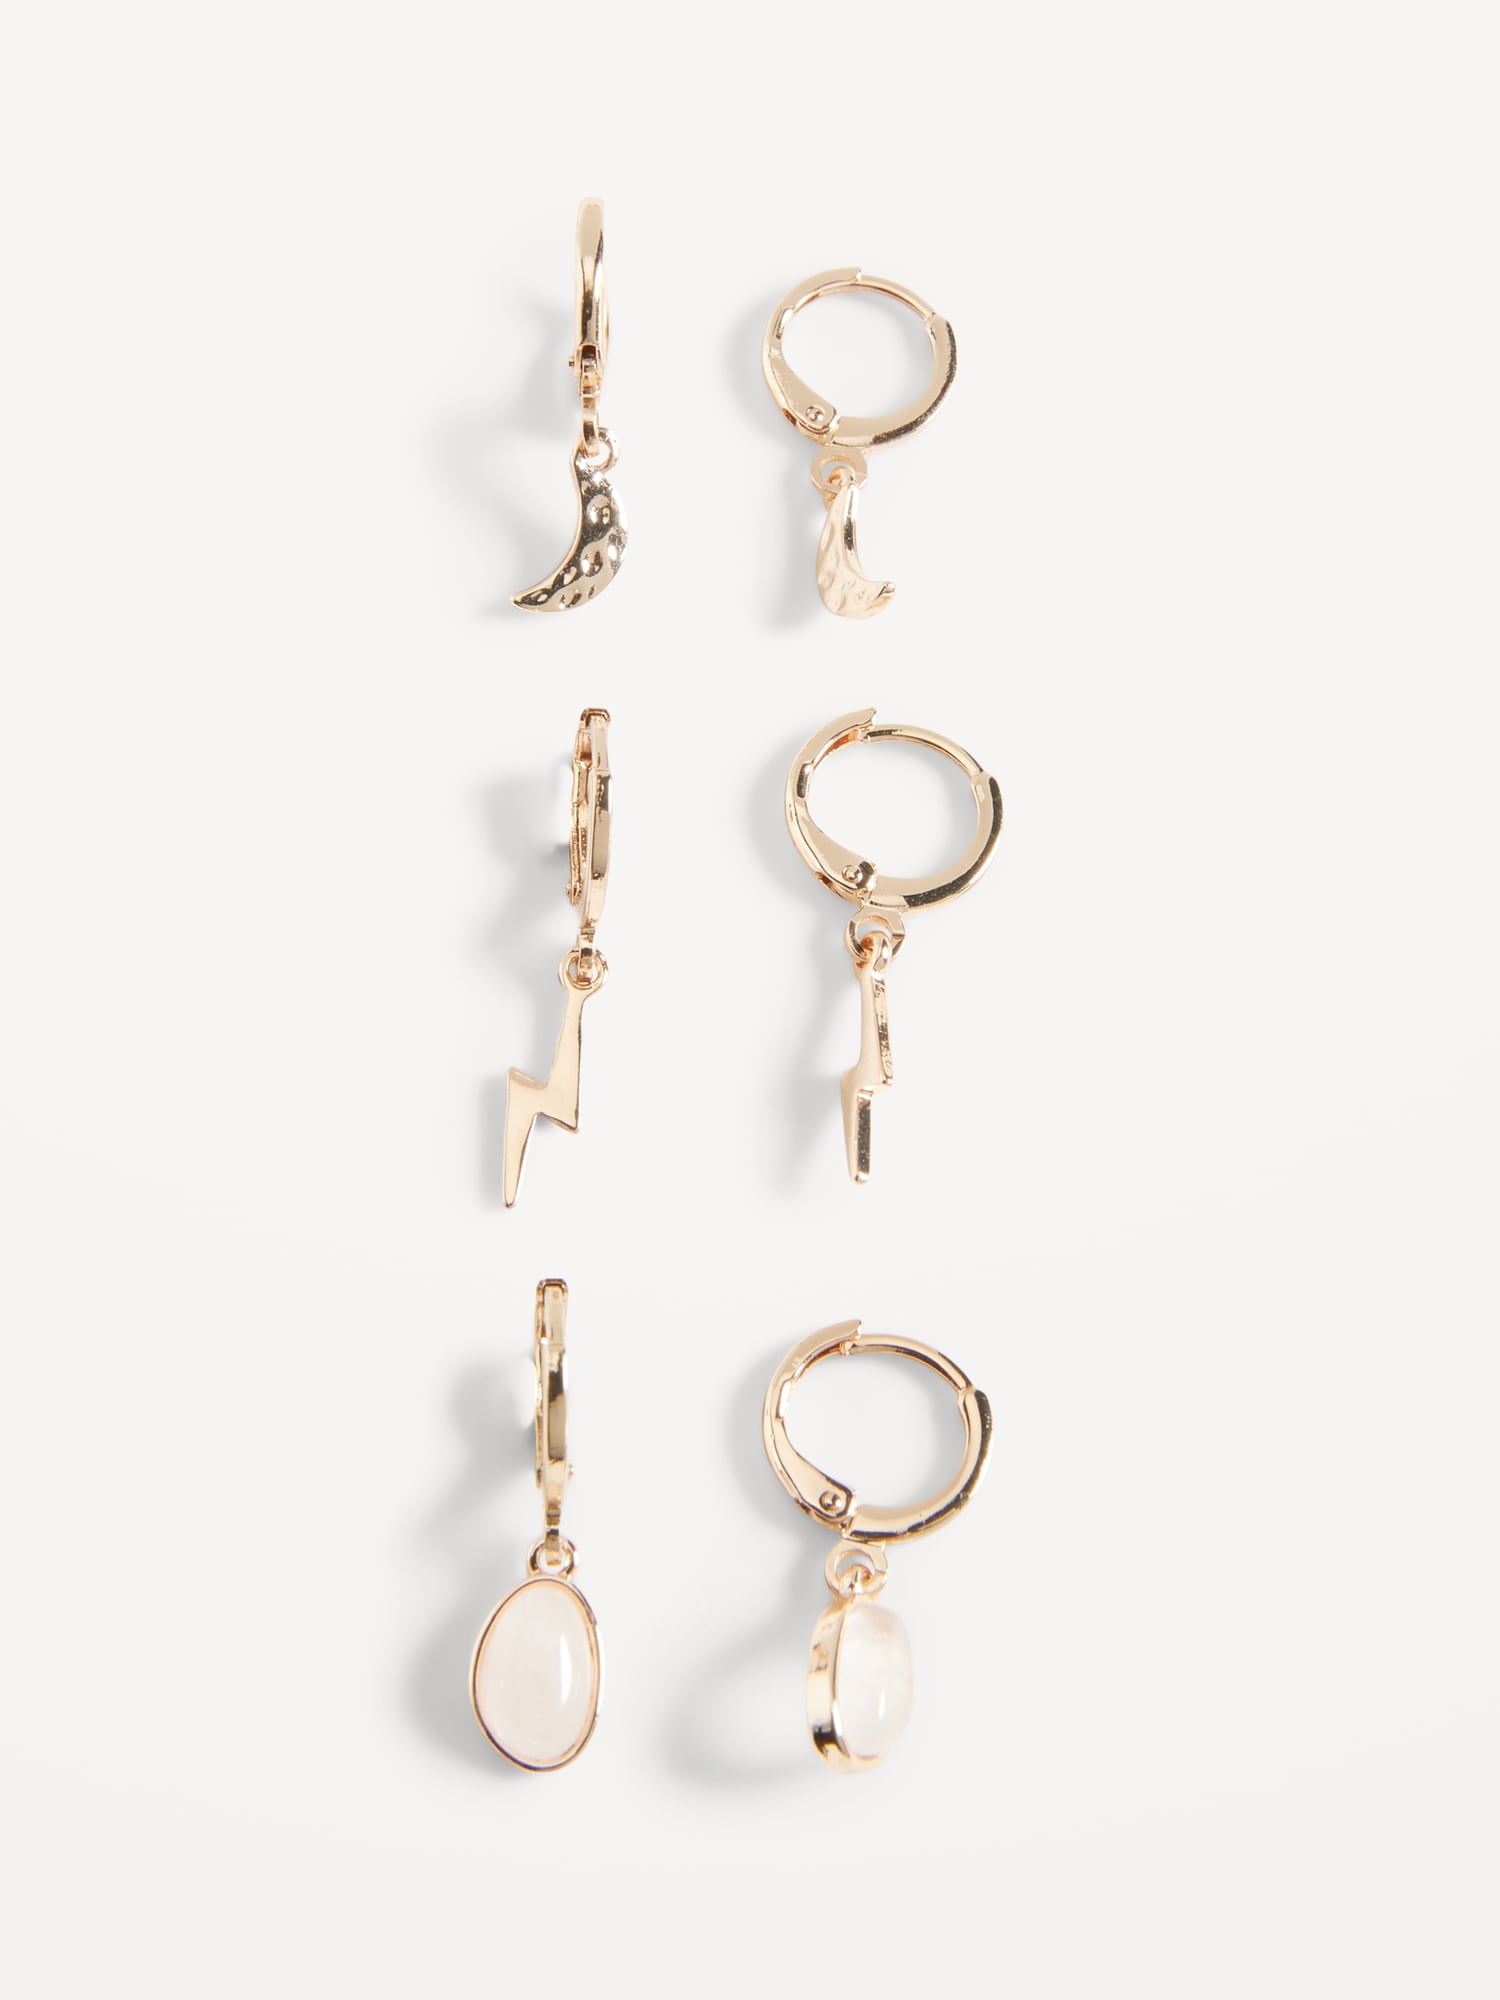 Old Navy Gold-Toned Huggie Hoop Drop Earrings Variety 3-Pack for Women gold. 1